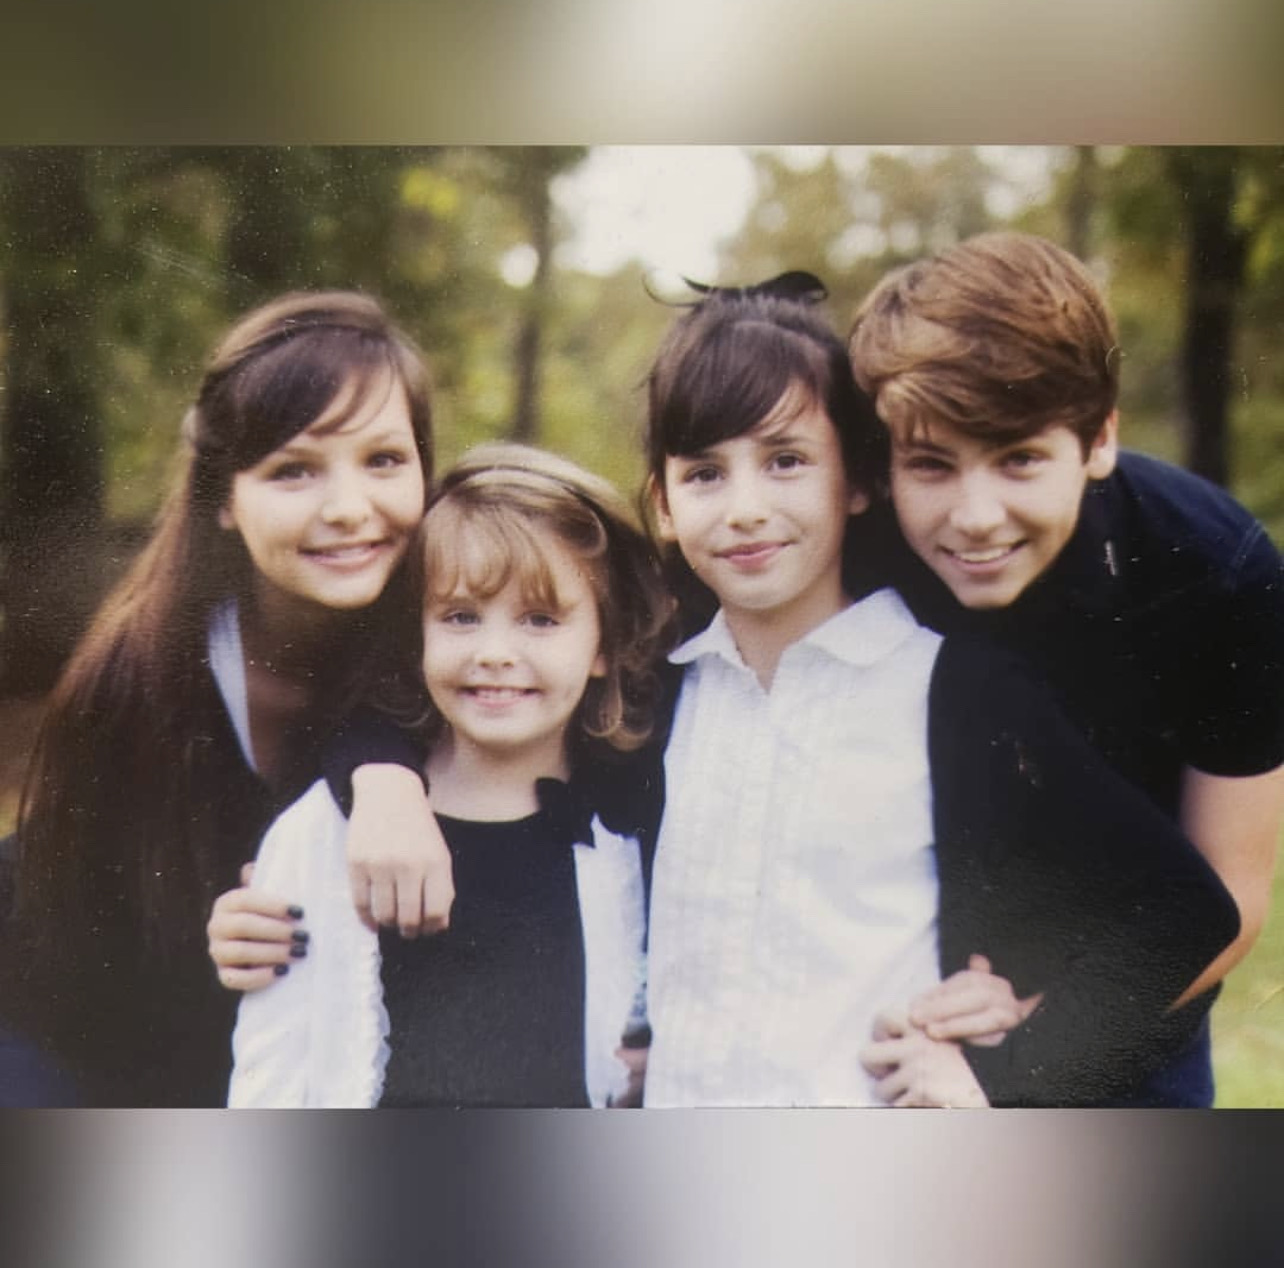 Cassady McClincy with her siblings - Gavin, Callie, and Kaya.